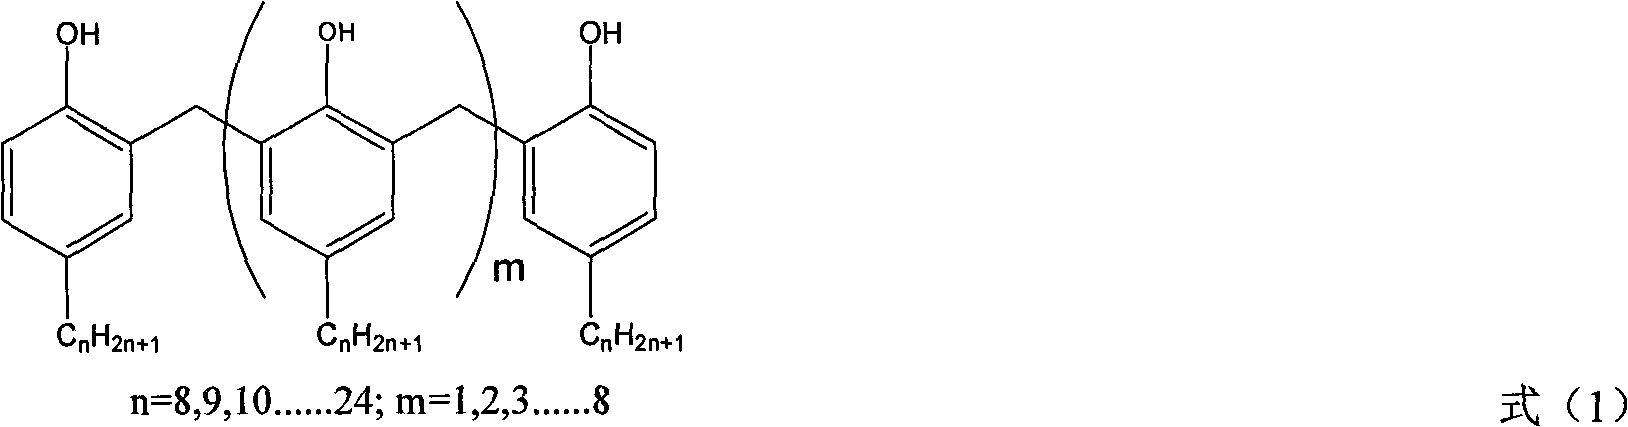 Process for preparing alkylphenol formaldehyde oligomer sulfonate